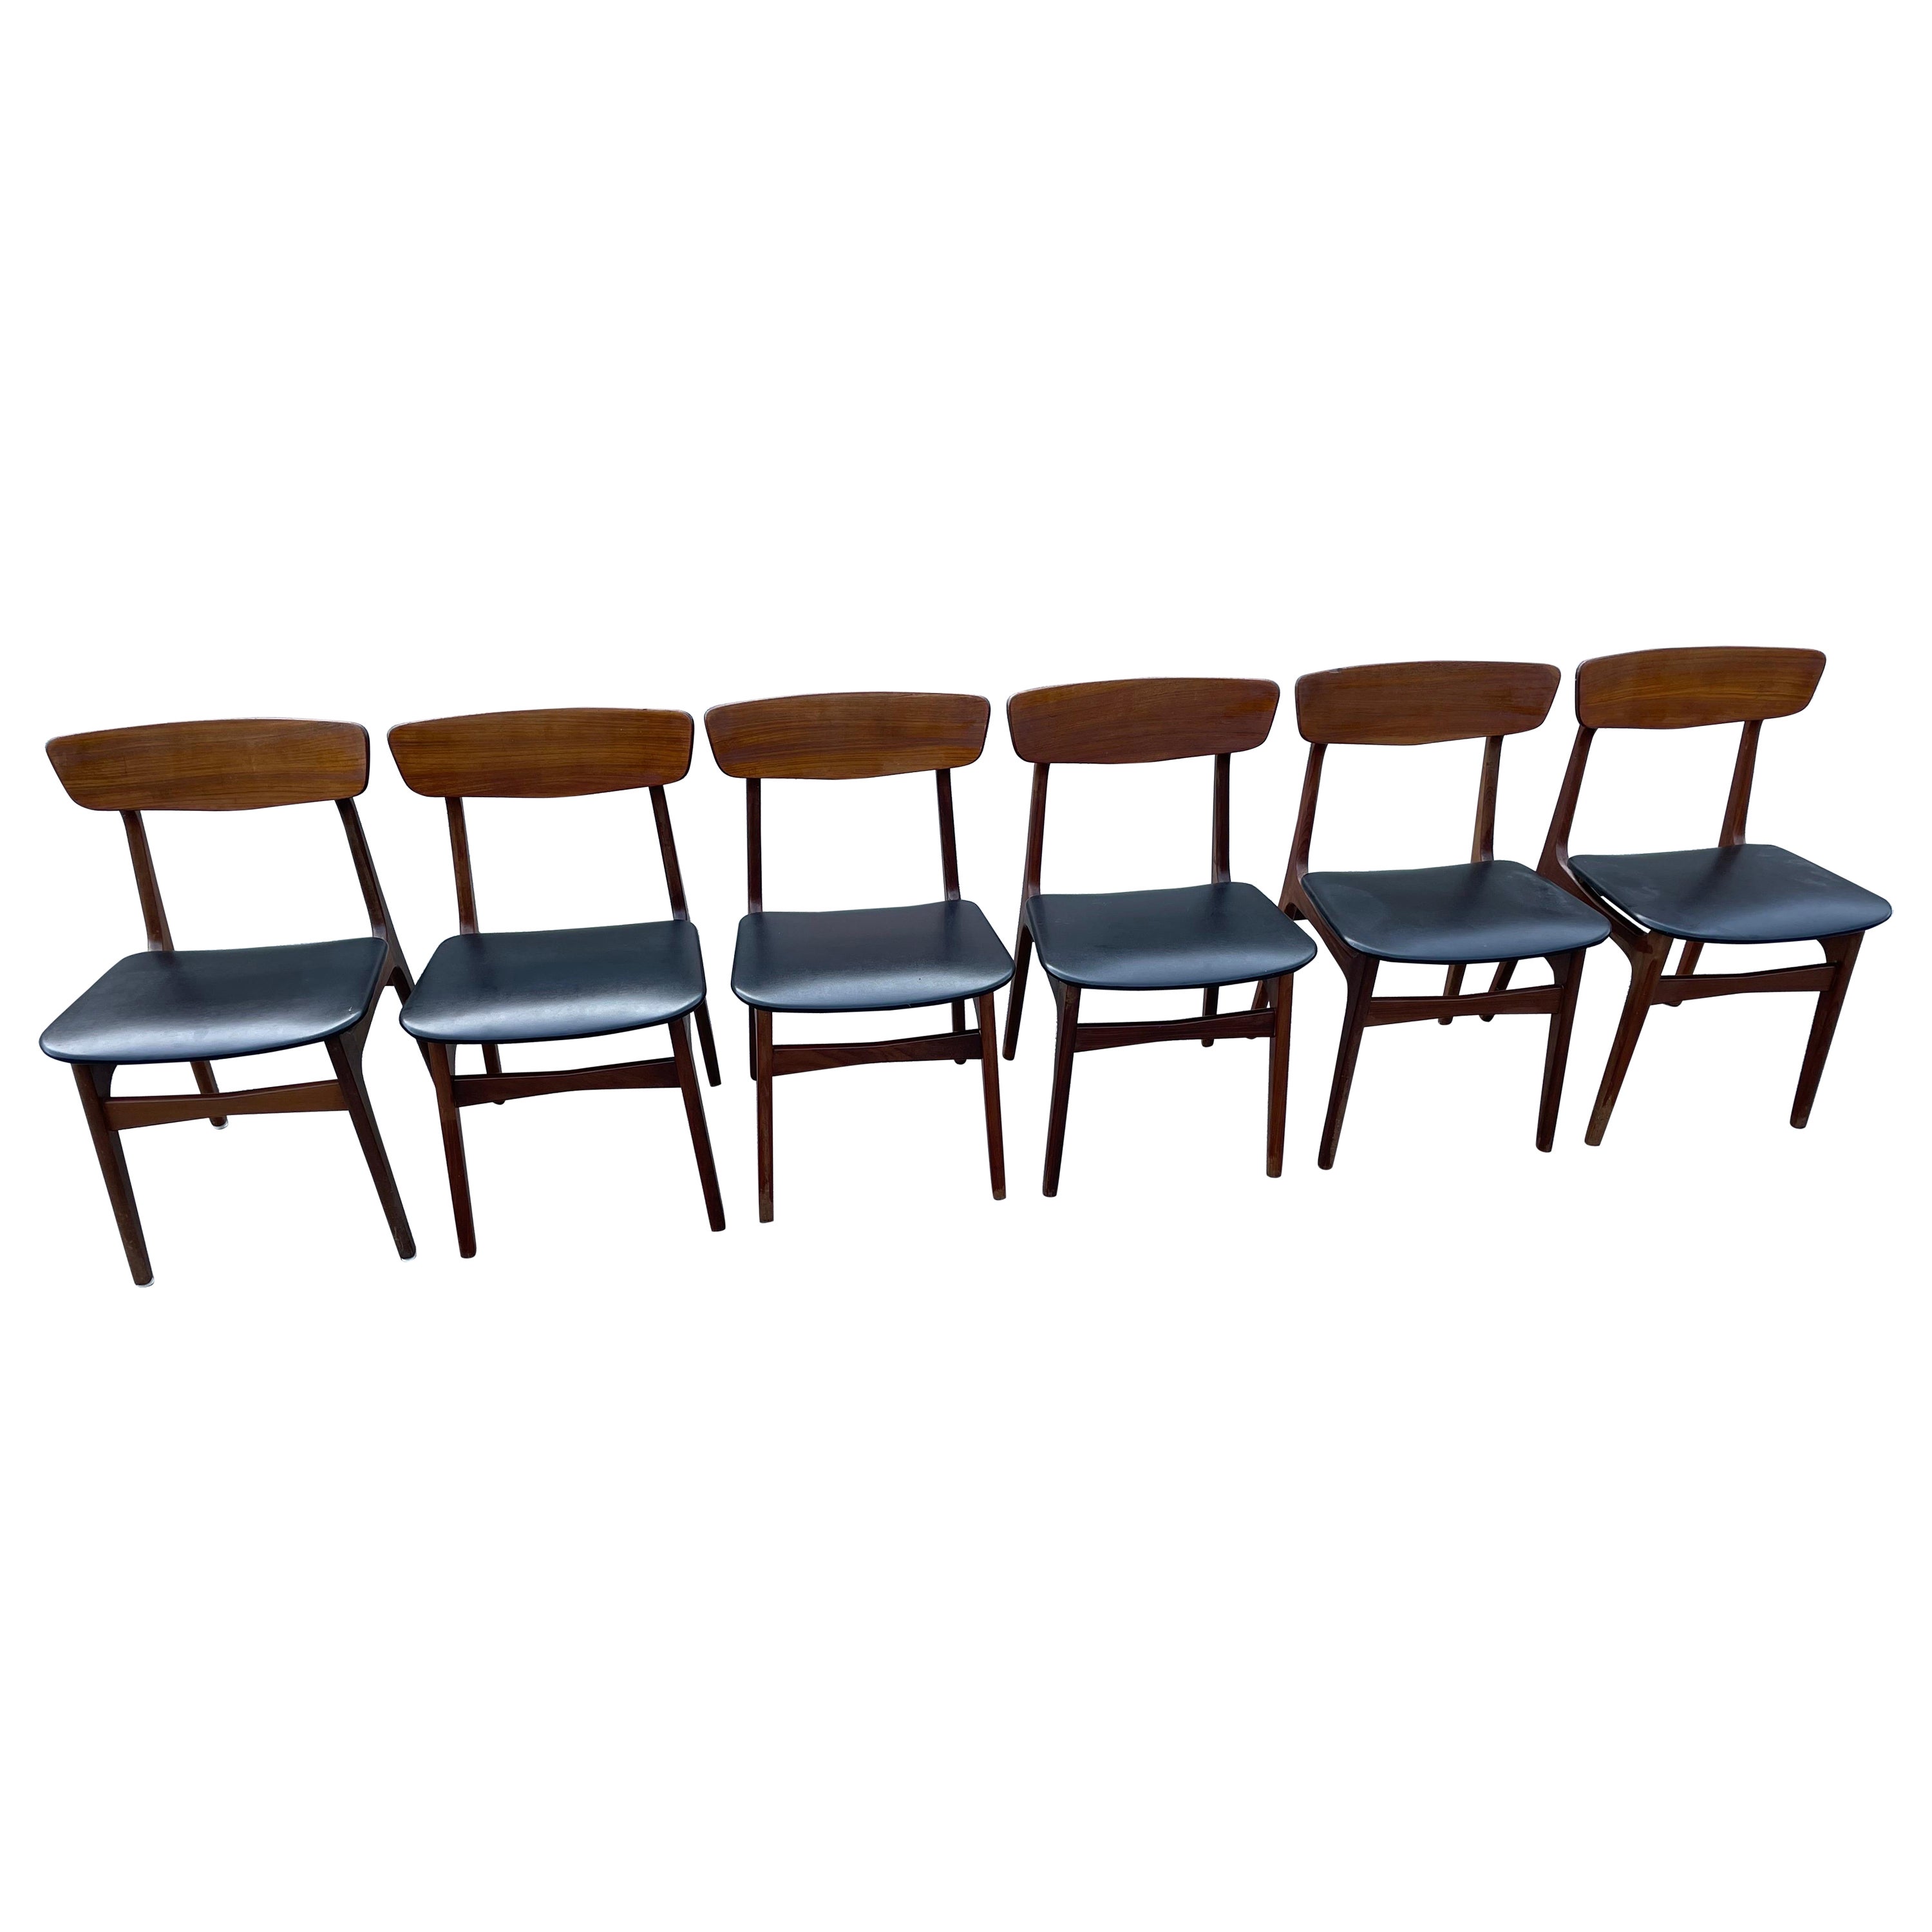 Set of 6 Midcentury Danish Chairs in Teak by Schiønning & Elgaard, 1960s For Sale